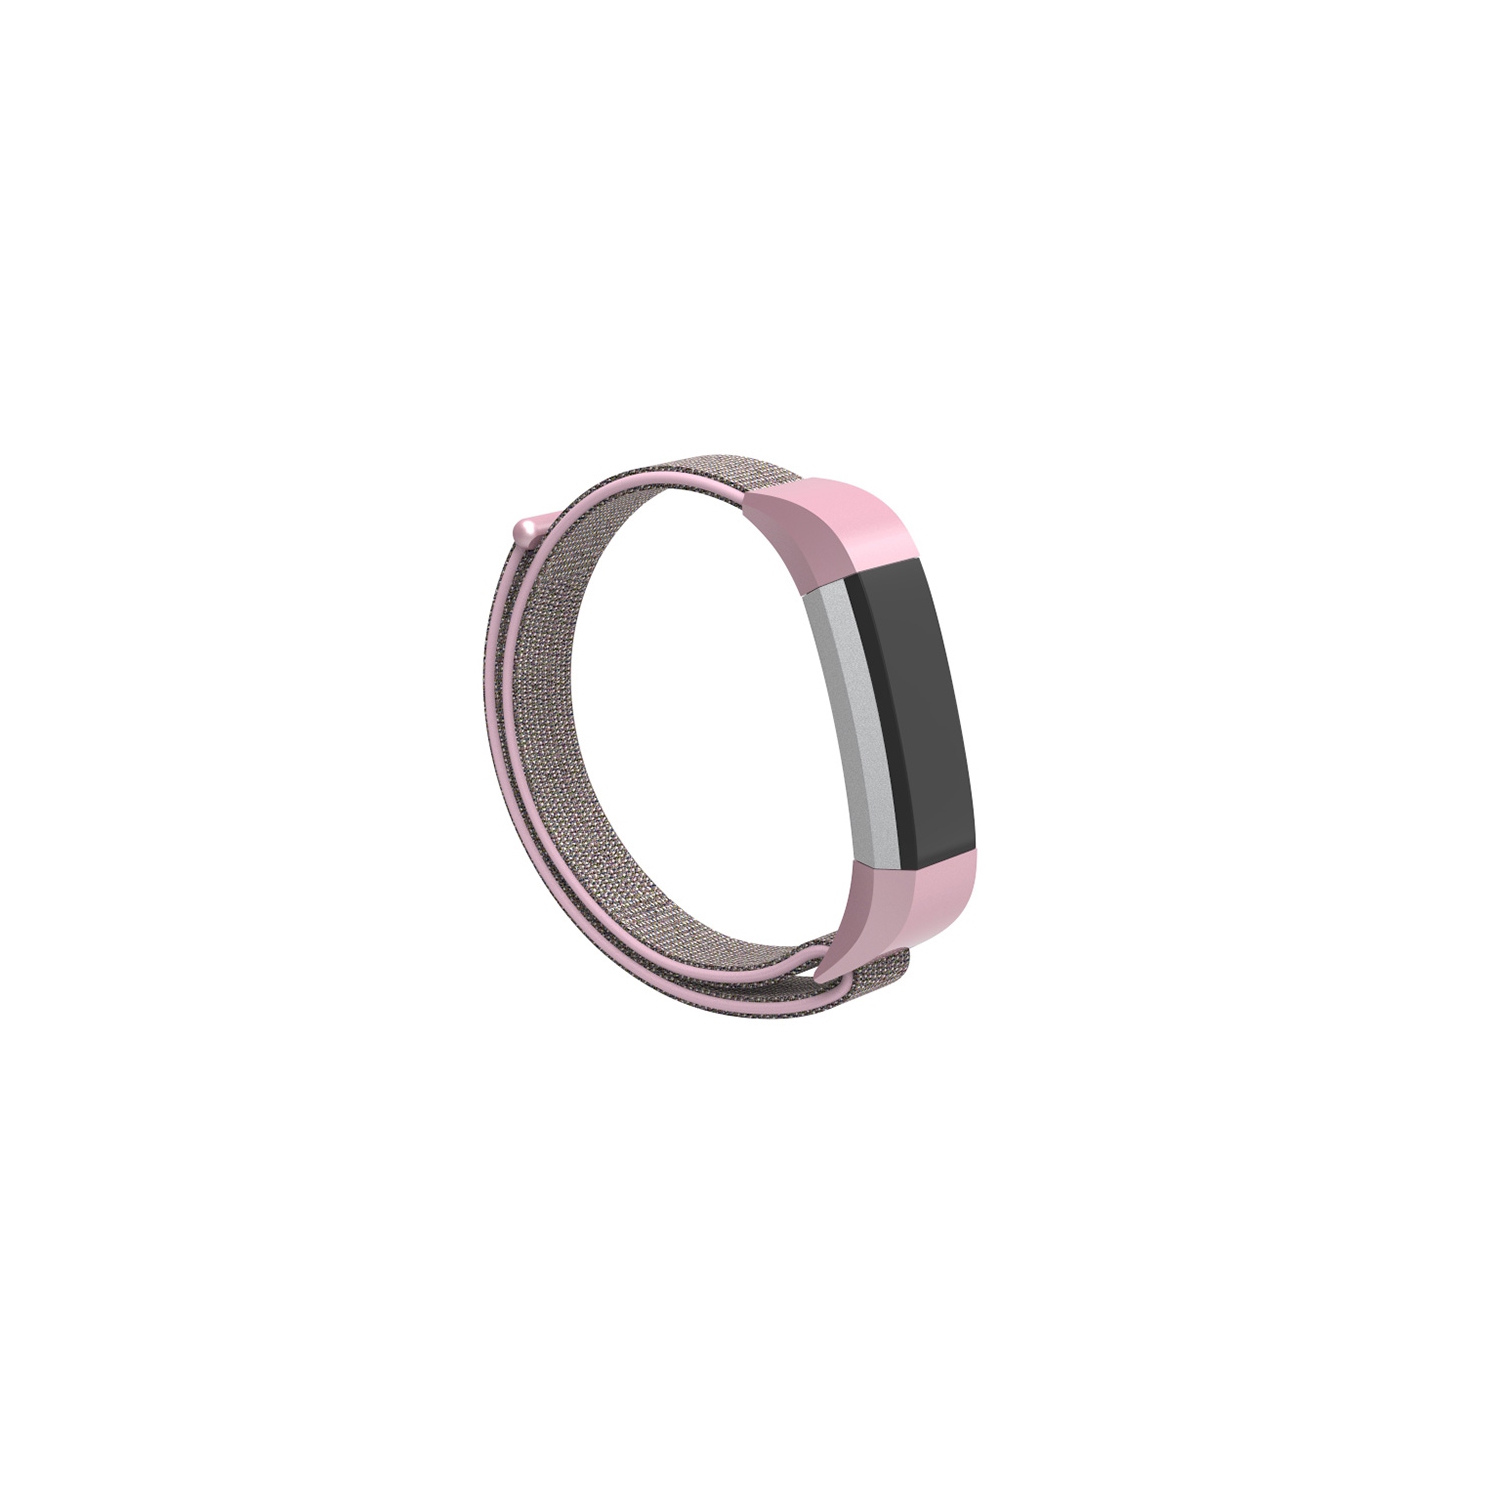 StrapsCo Woven Nylon Watch Band Strap for Fitbit Alta & Alta HR - Pink & Grey